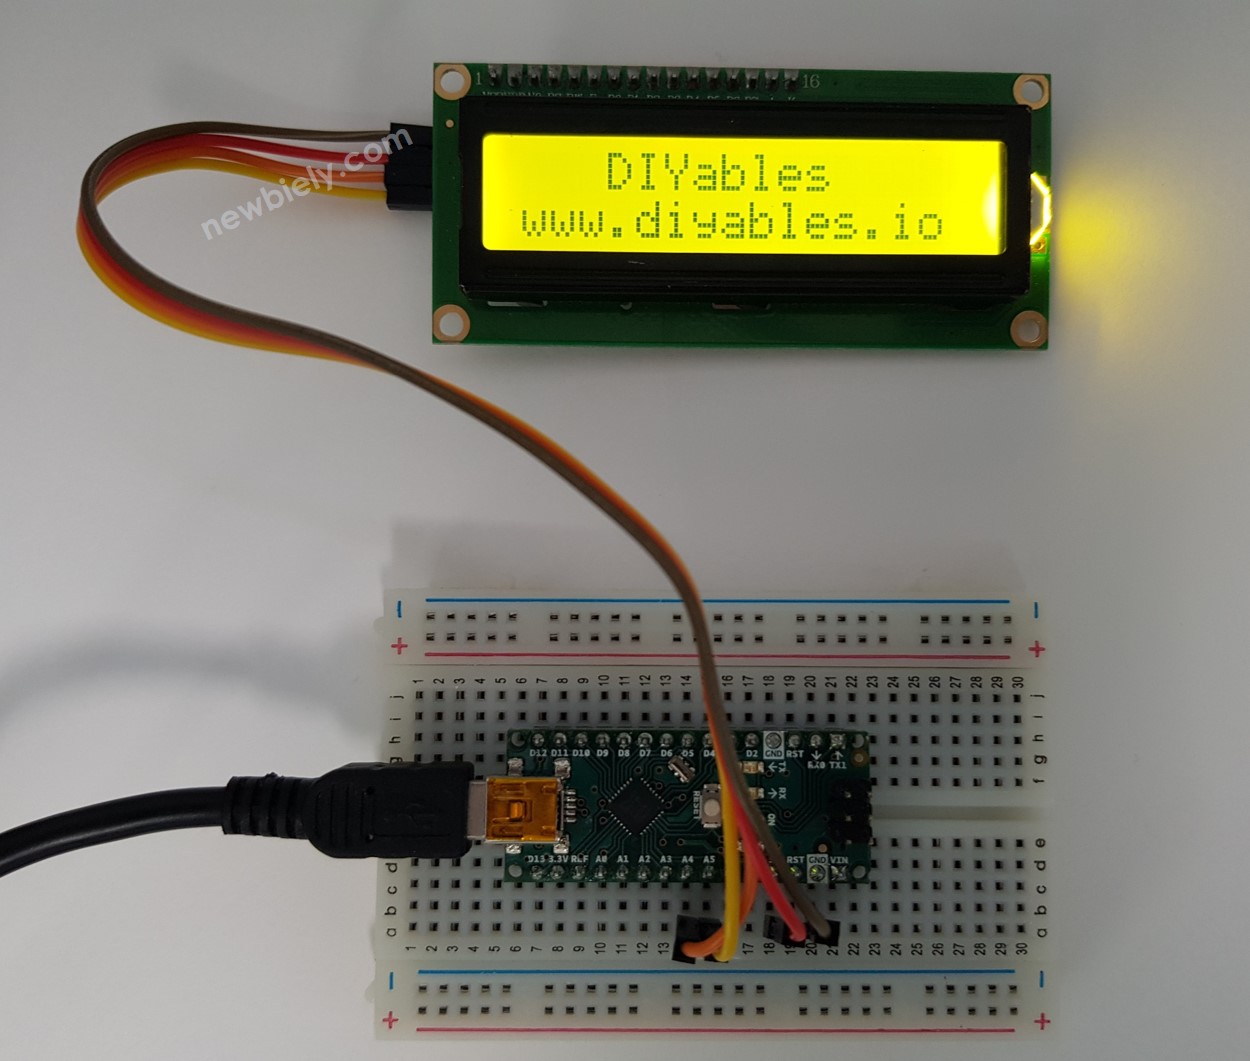 Arduino Nano display text on LCD